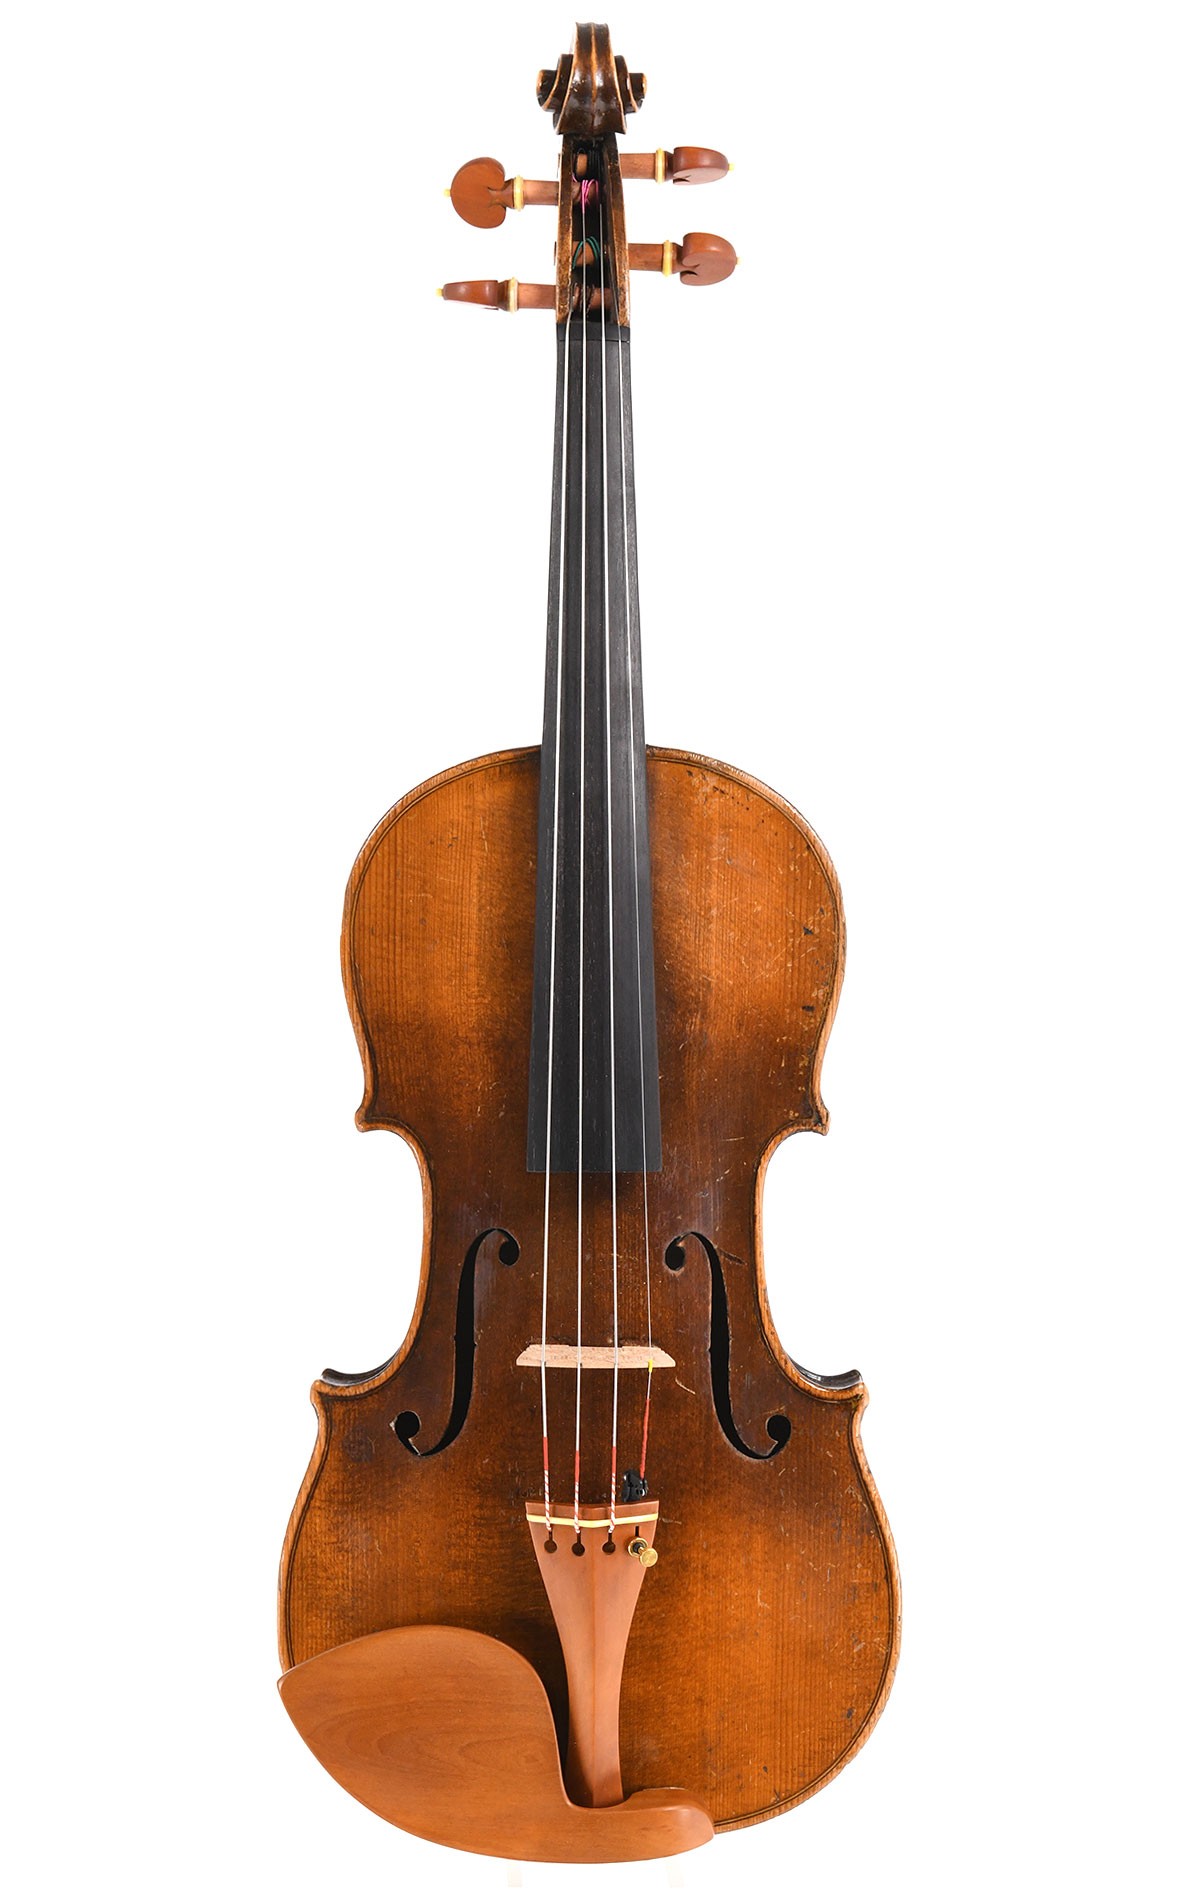 Antique violin circa 1850 - F. Hopf